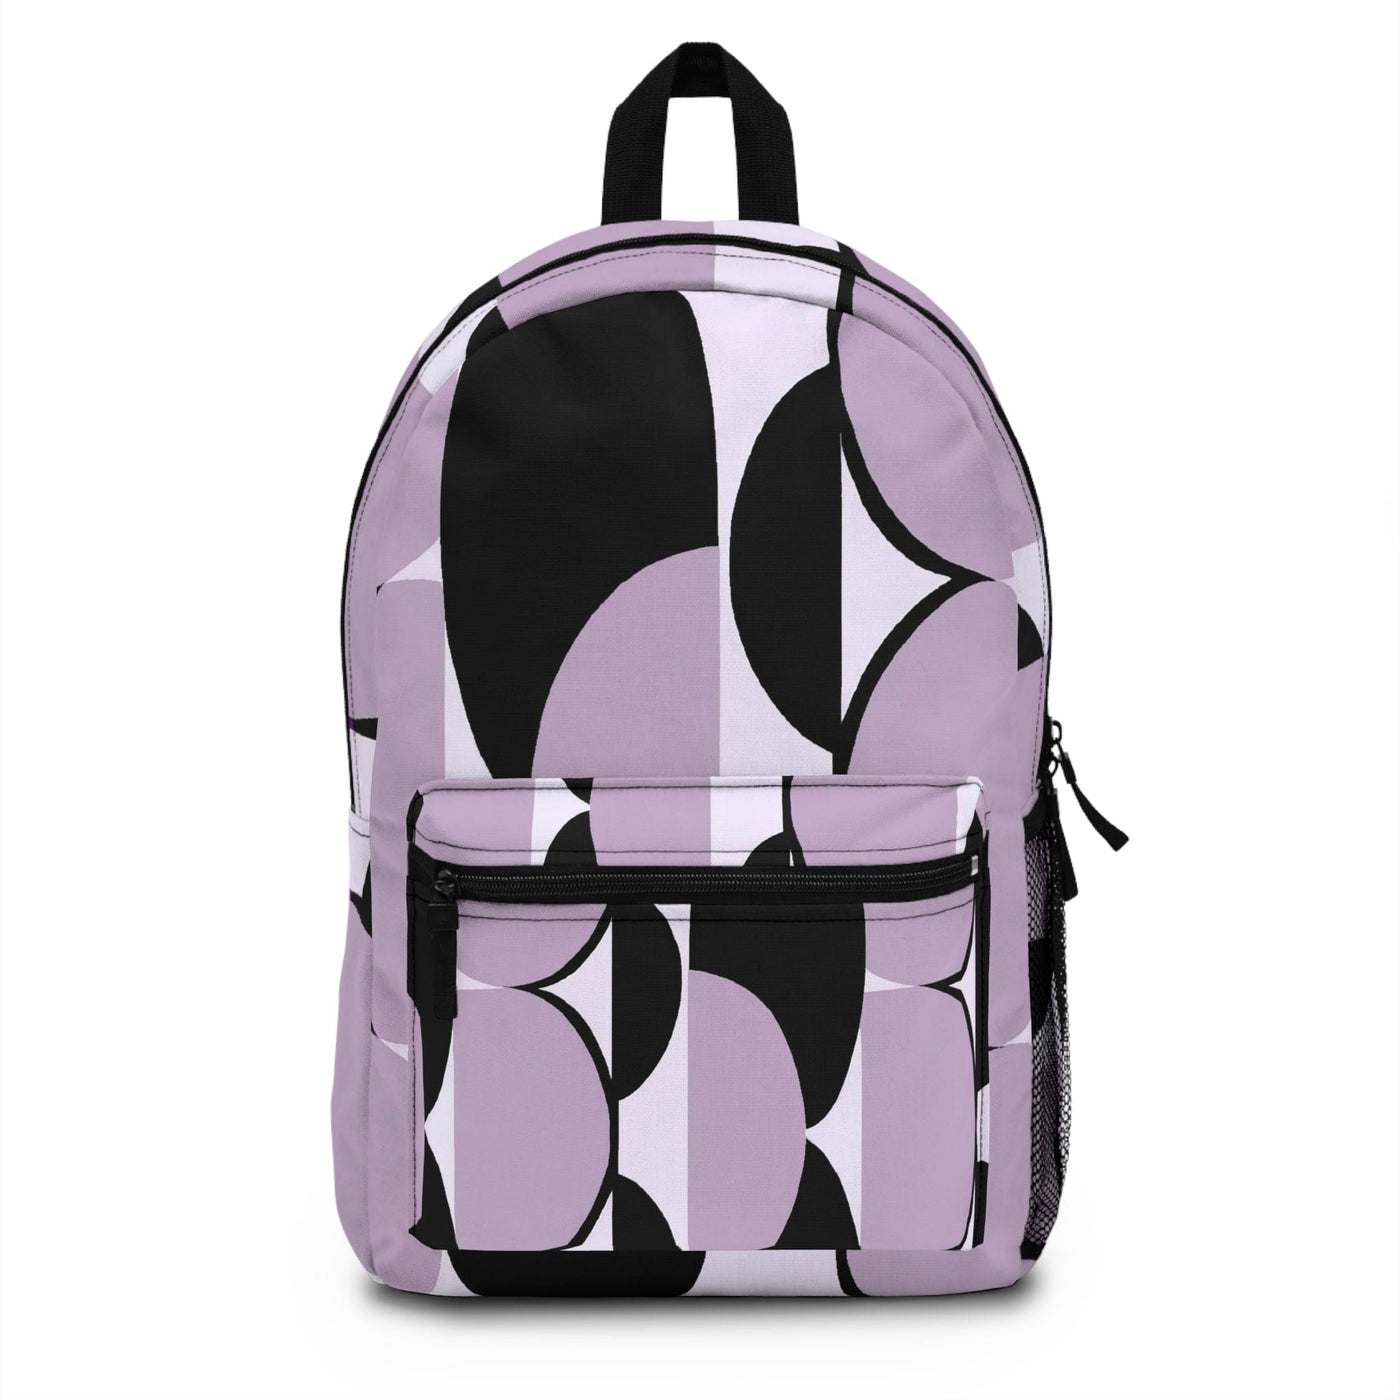 Backpack - Large Water-resistant Bag Geometric Lavender And Black Pattern - Bags